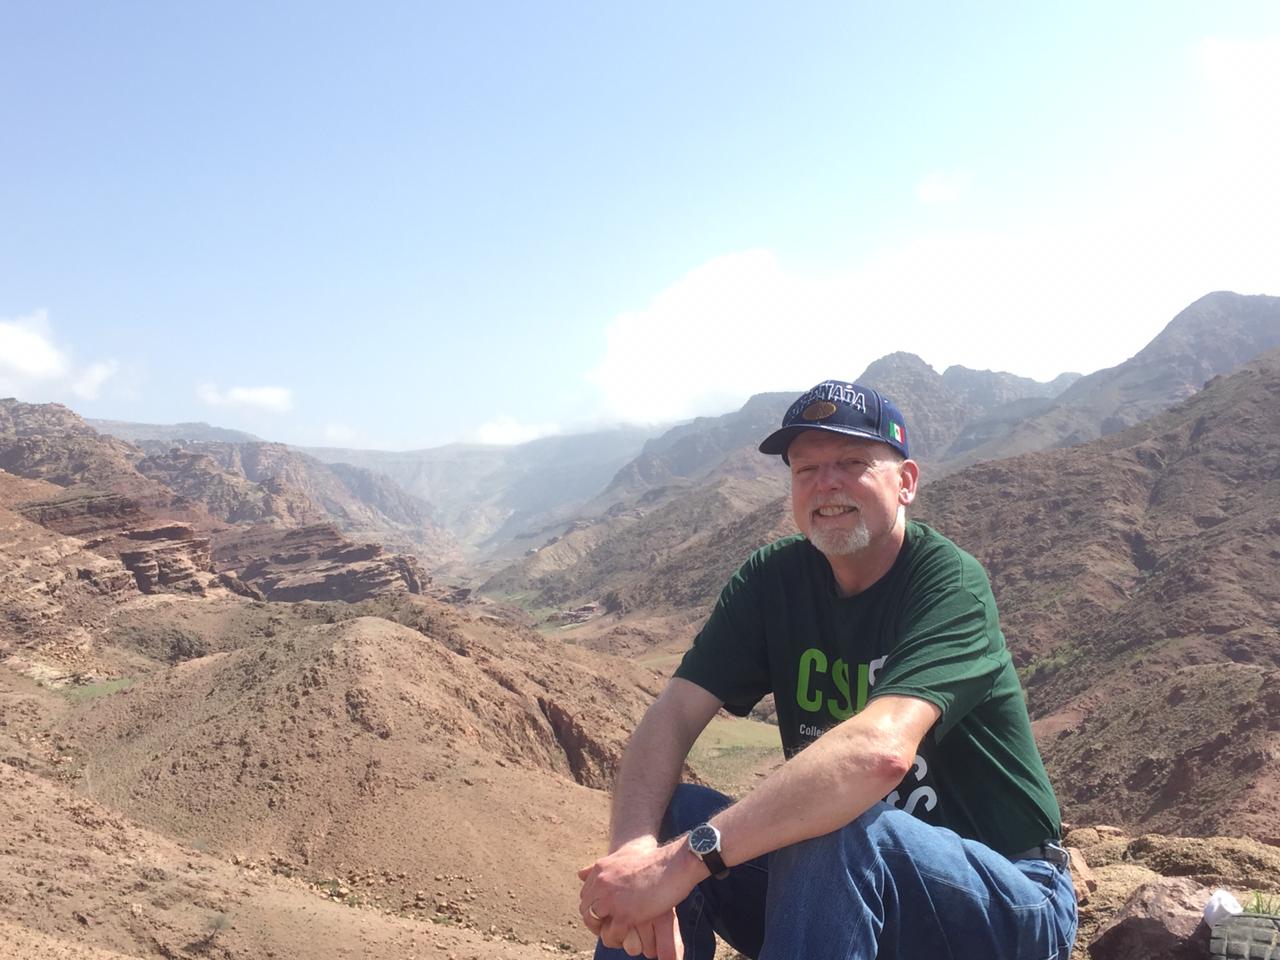 Faculty Feature: Professor Cory’s Fulbright Fellowship in Jordan